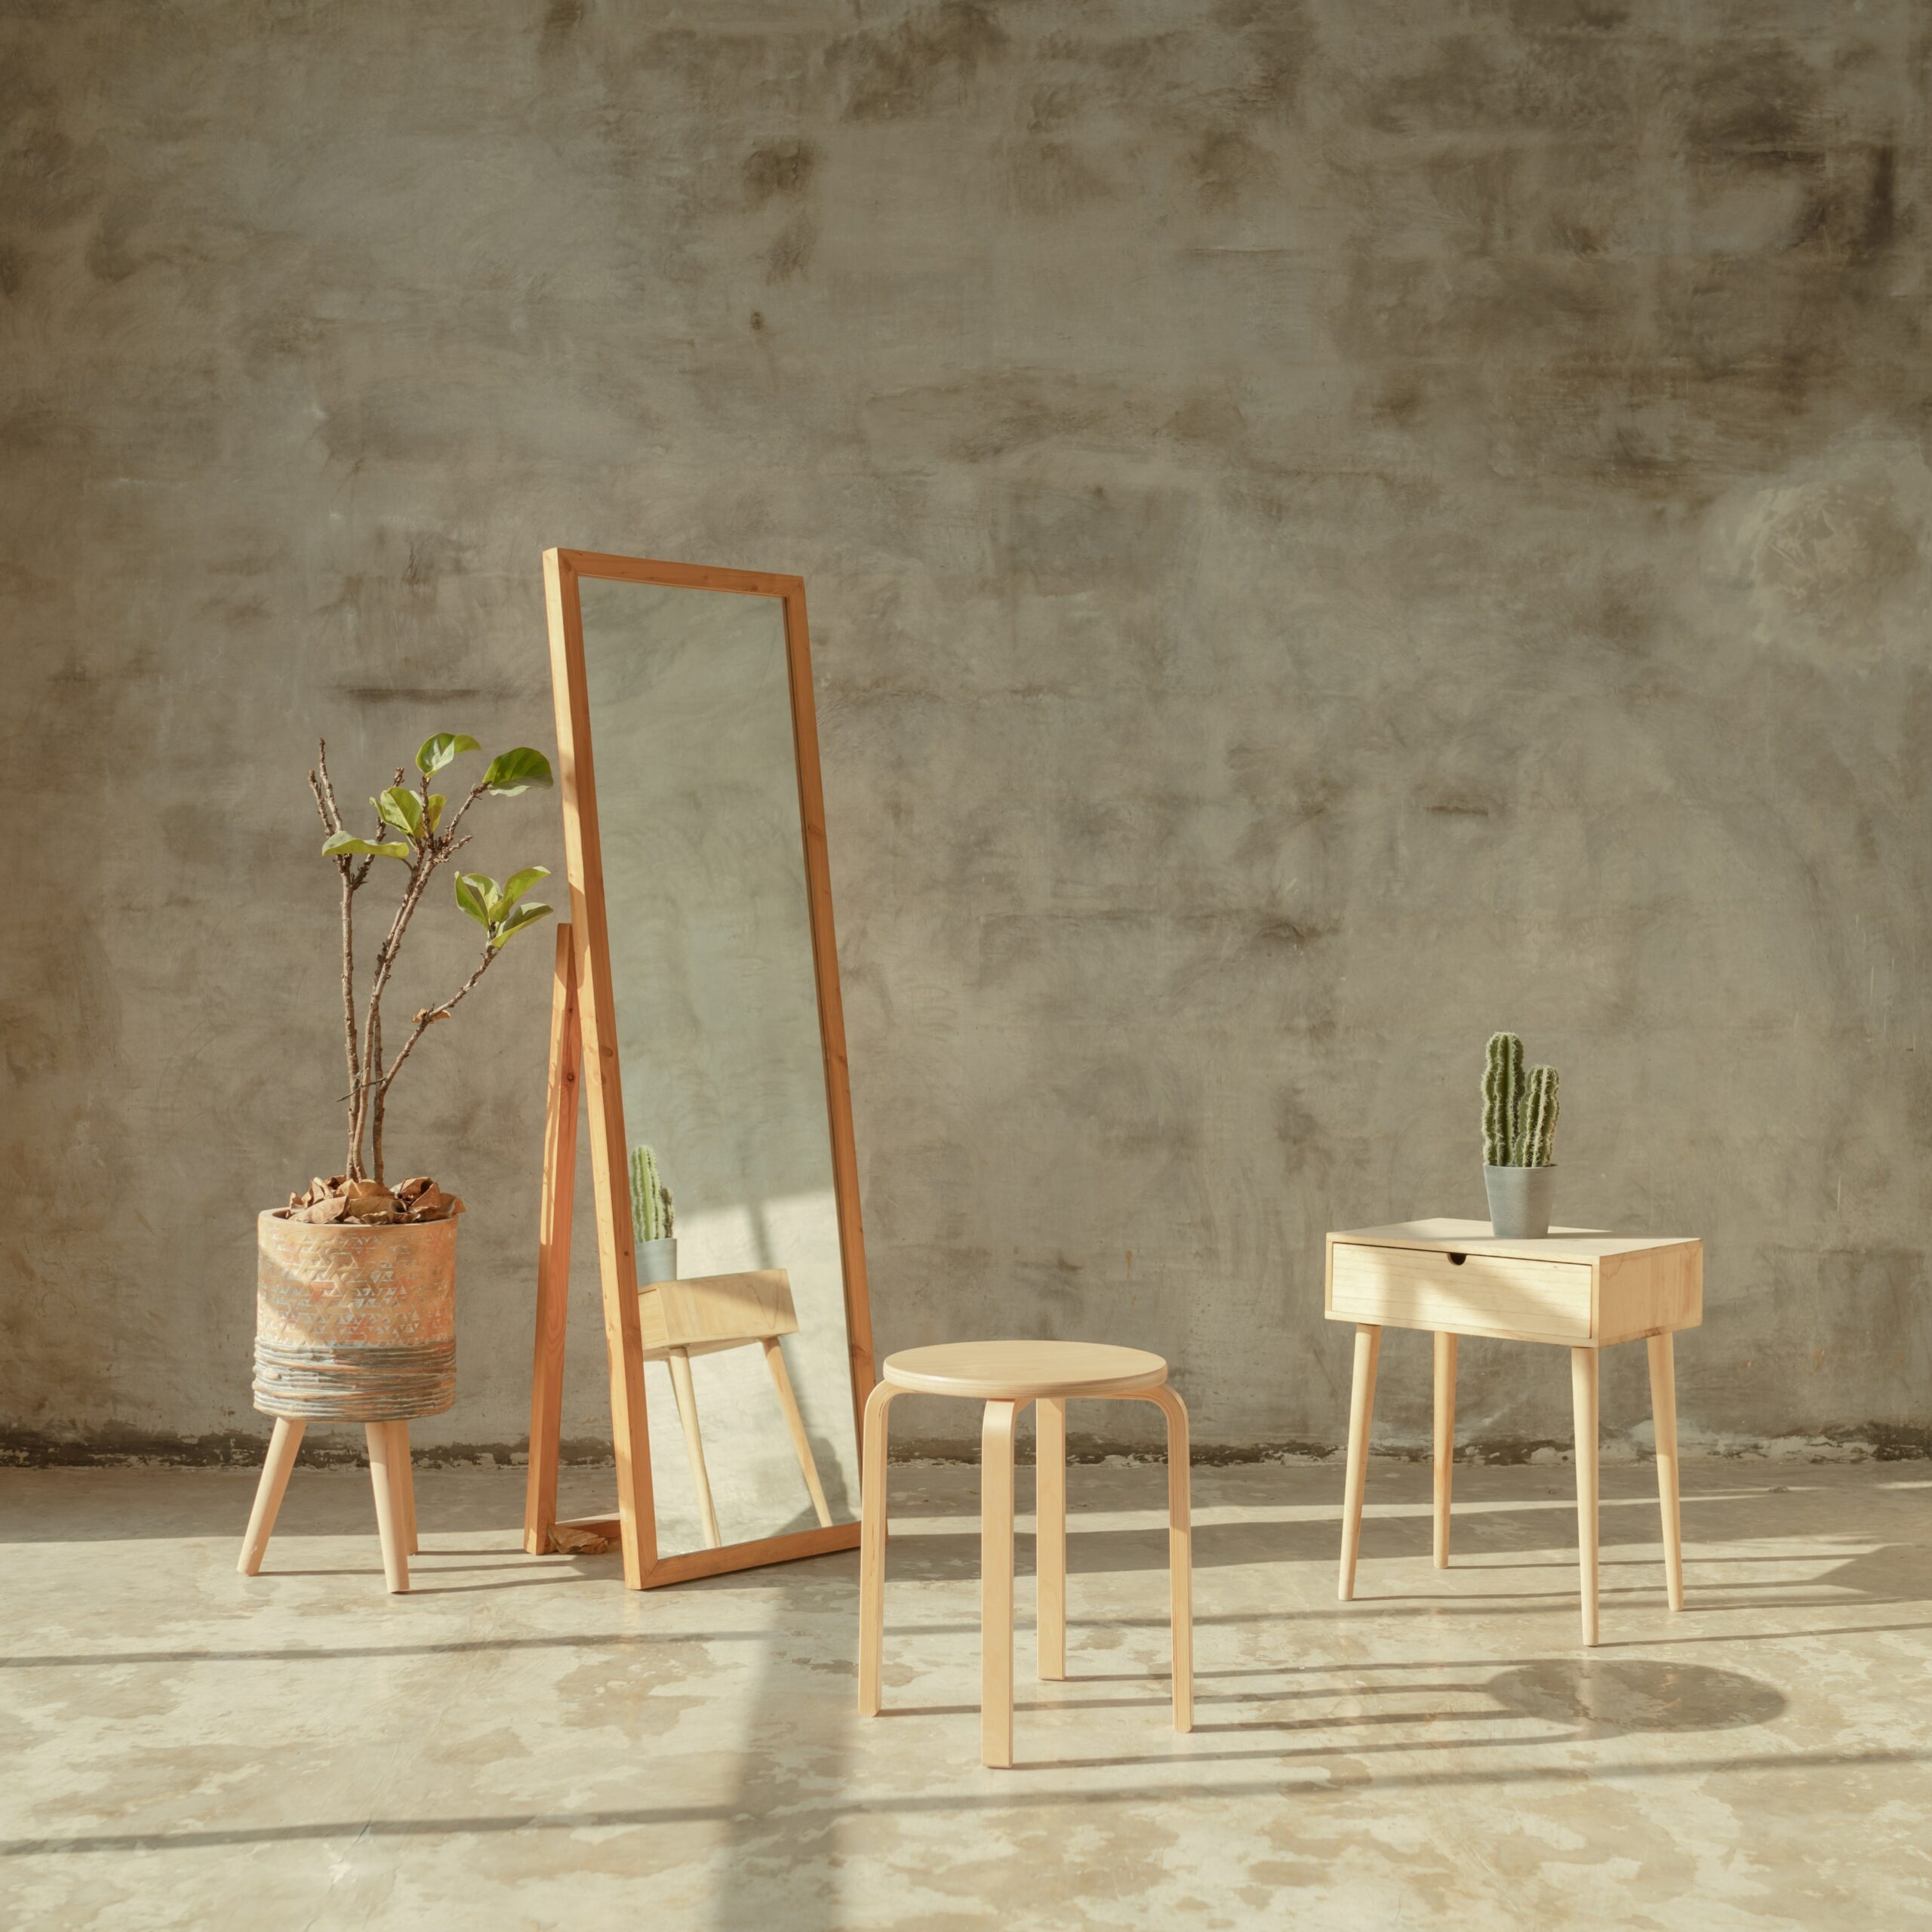 The Beautiful Influence of Scandinavia on Furniture Design